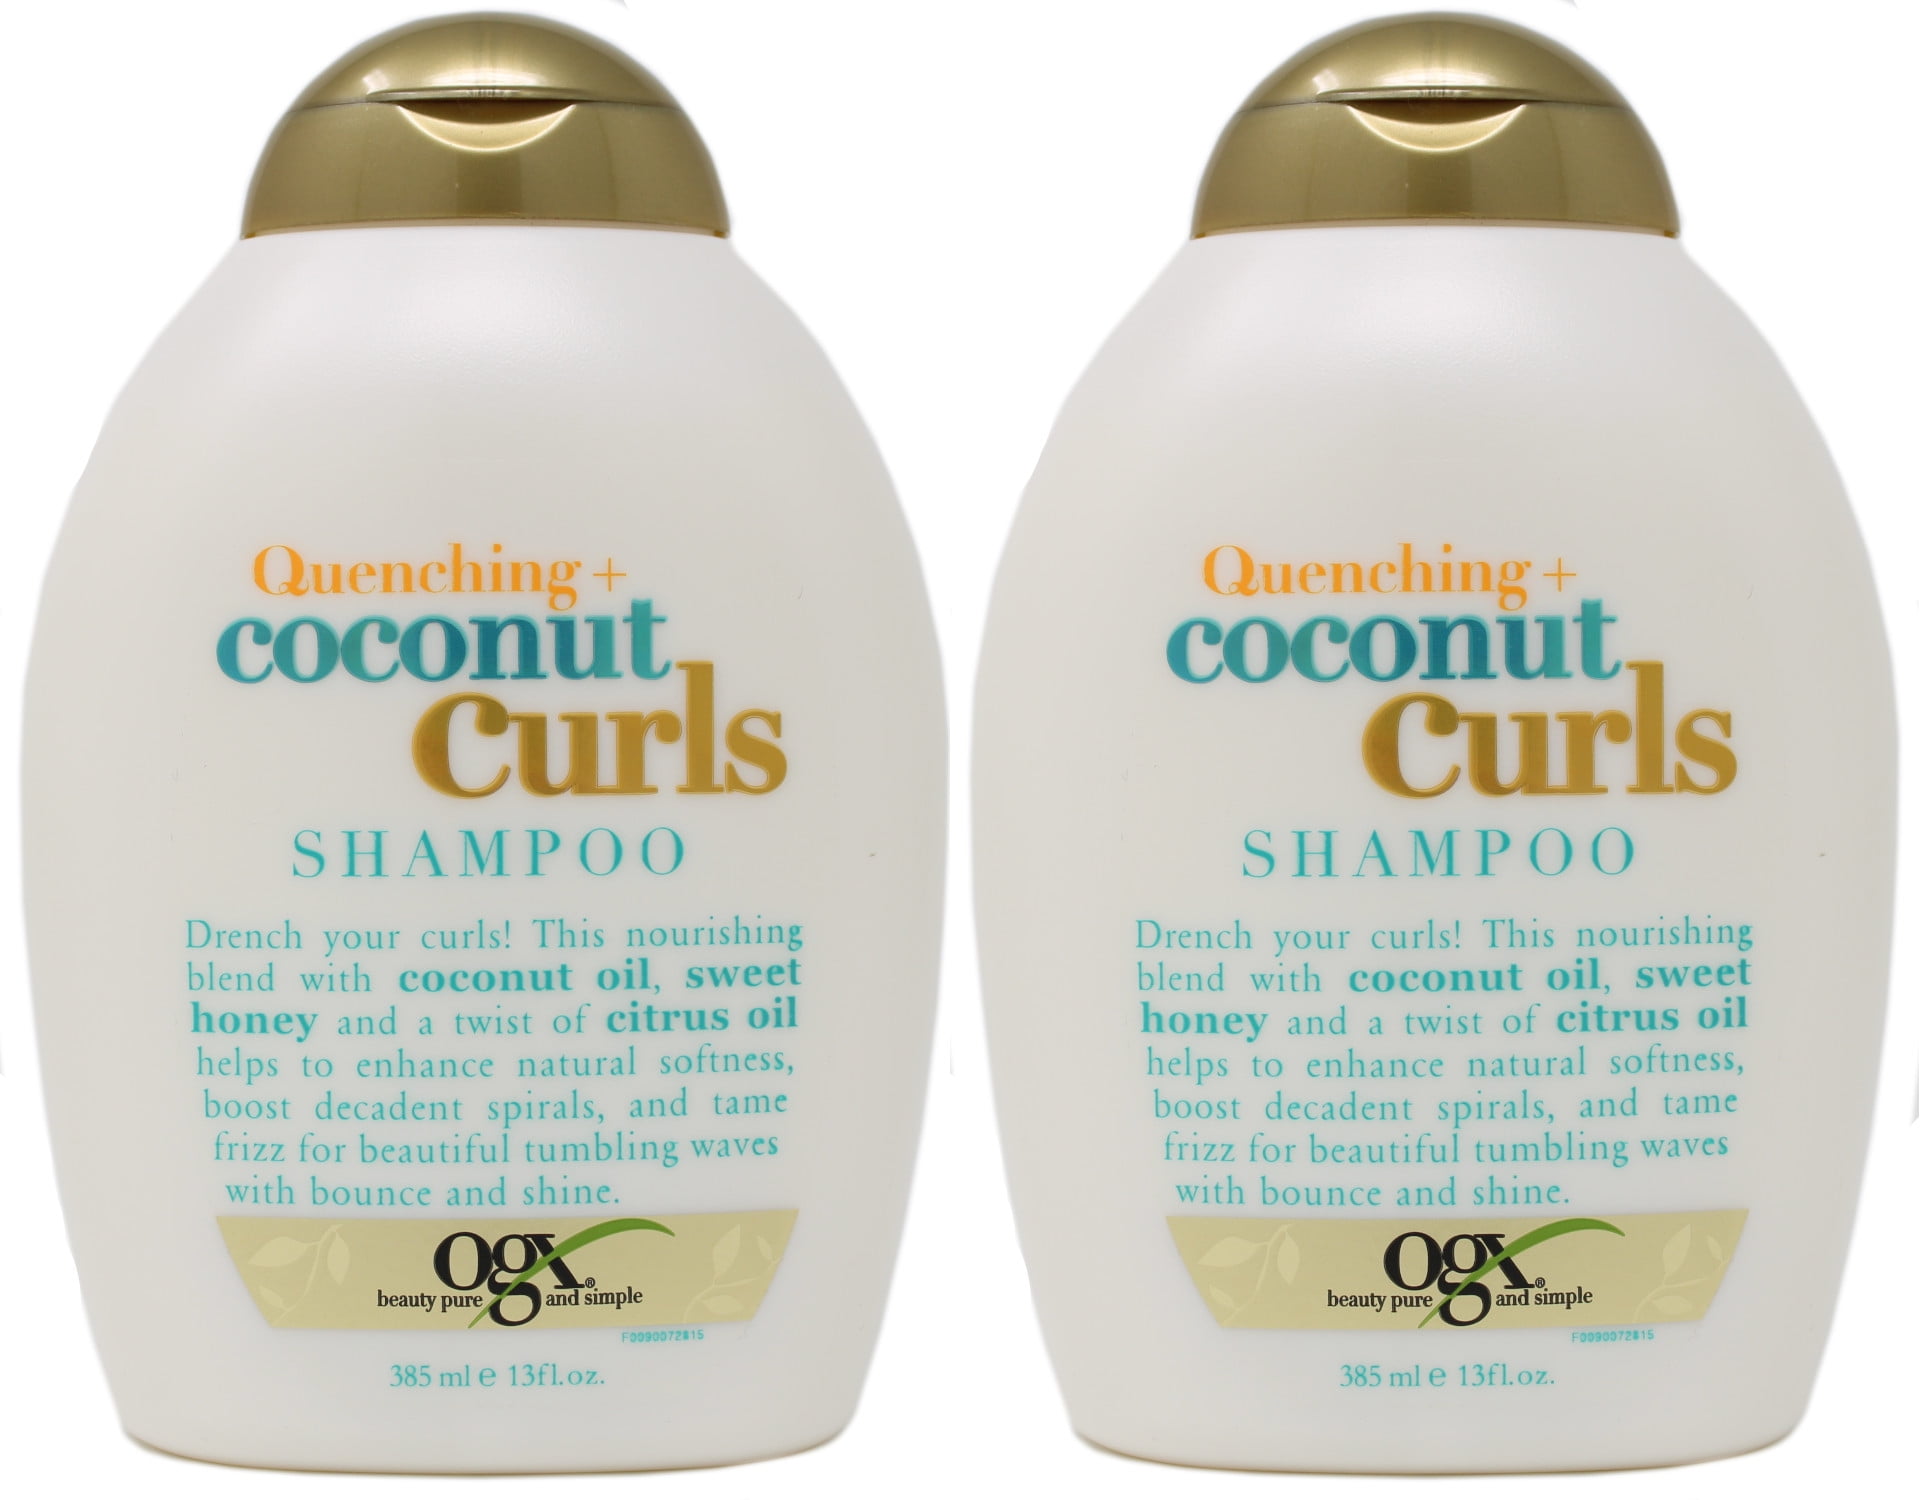 Curls shampoo. Coconut Curls Shampoo. Shampoo for curly hair og x. Shampoo for curly hair Ox.